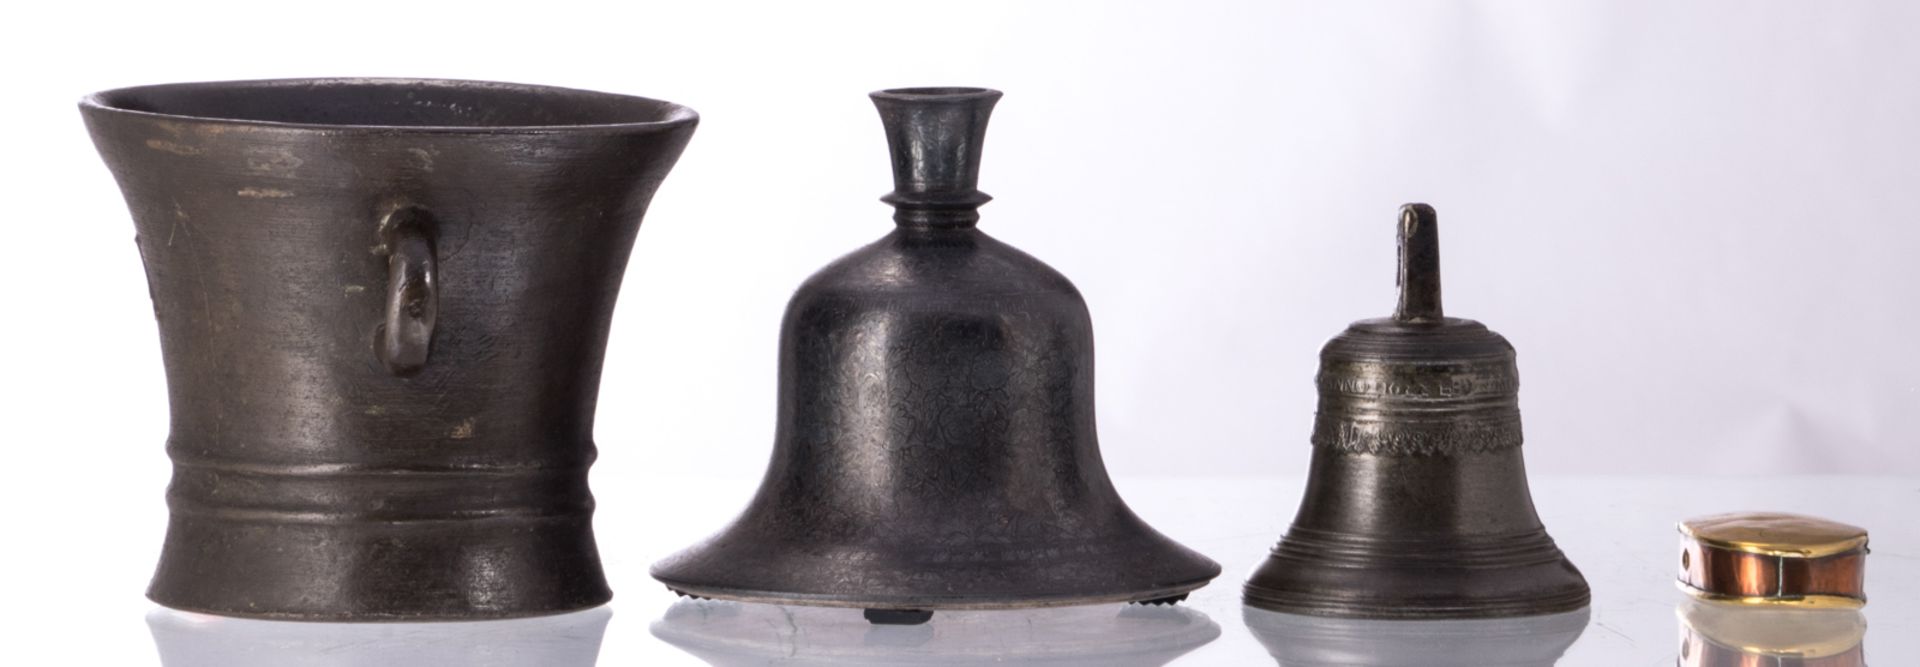 A bronze bell, dated 1688; a 19thC Middle Eastern cast iron recipient, a large bronze mortar and - Bild 2 aus 12